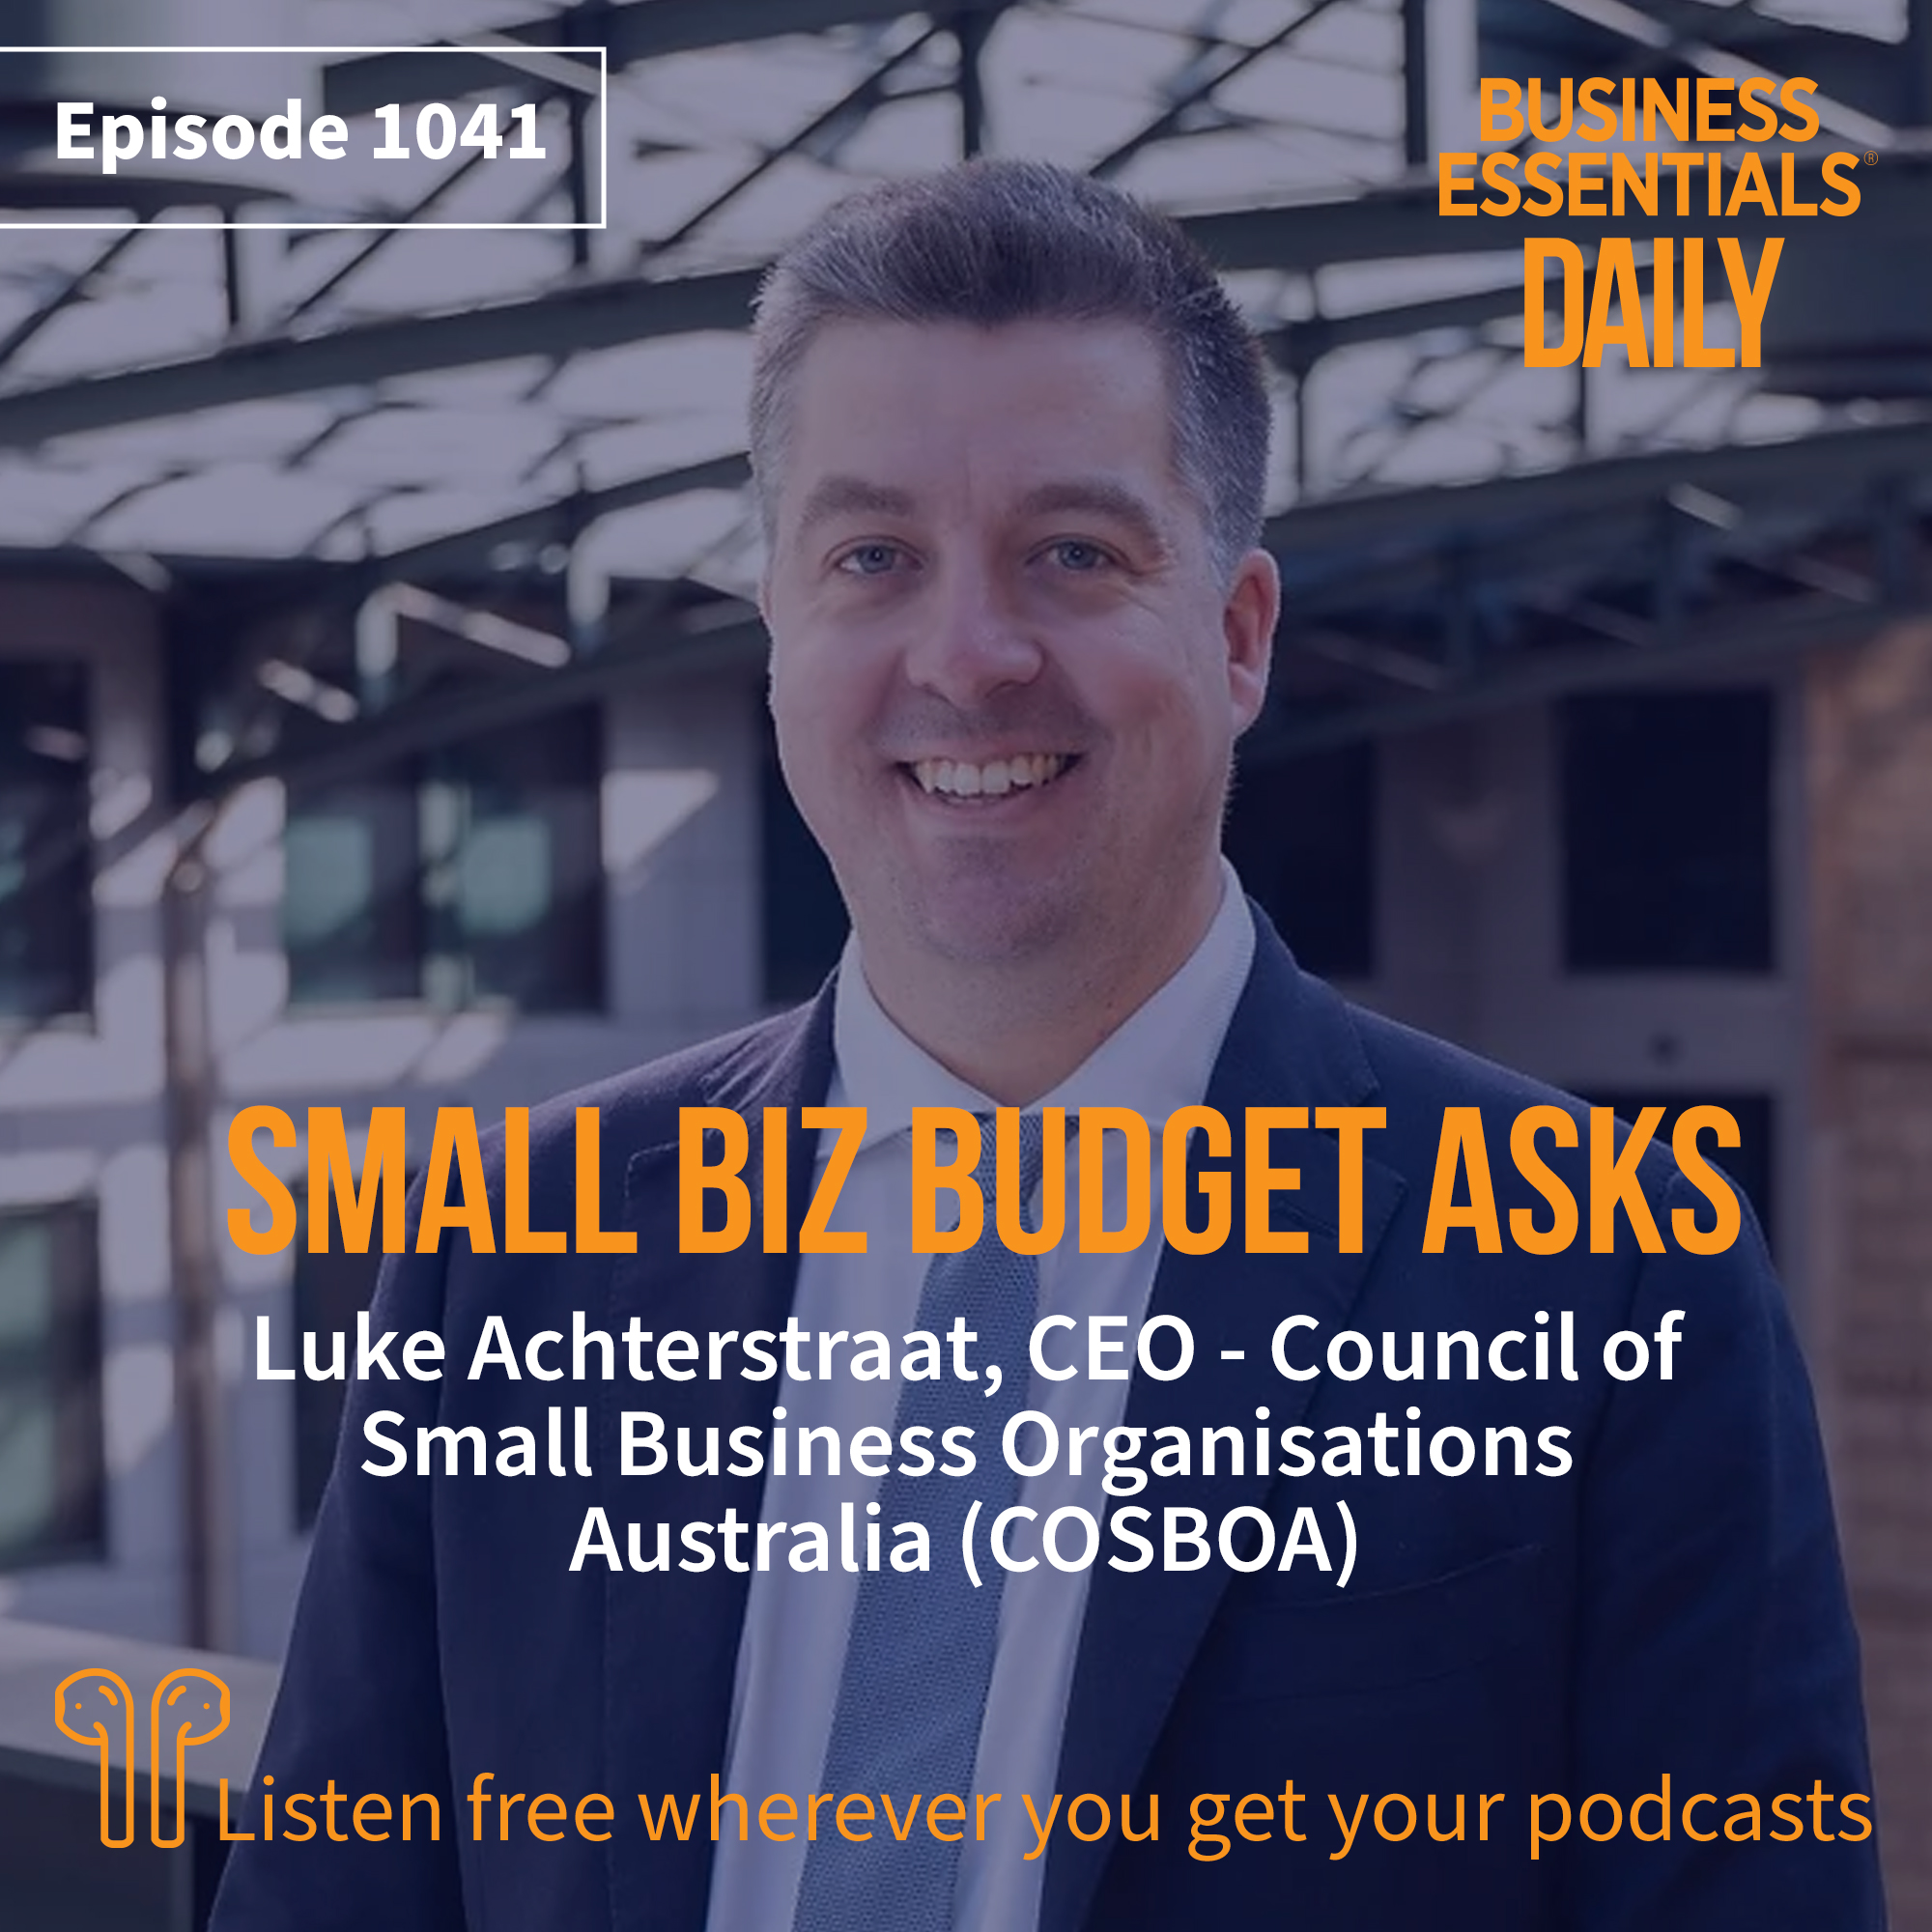 Small biz budget asks